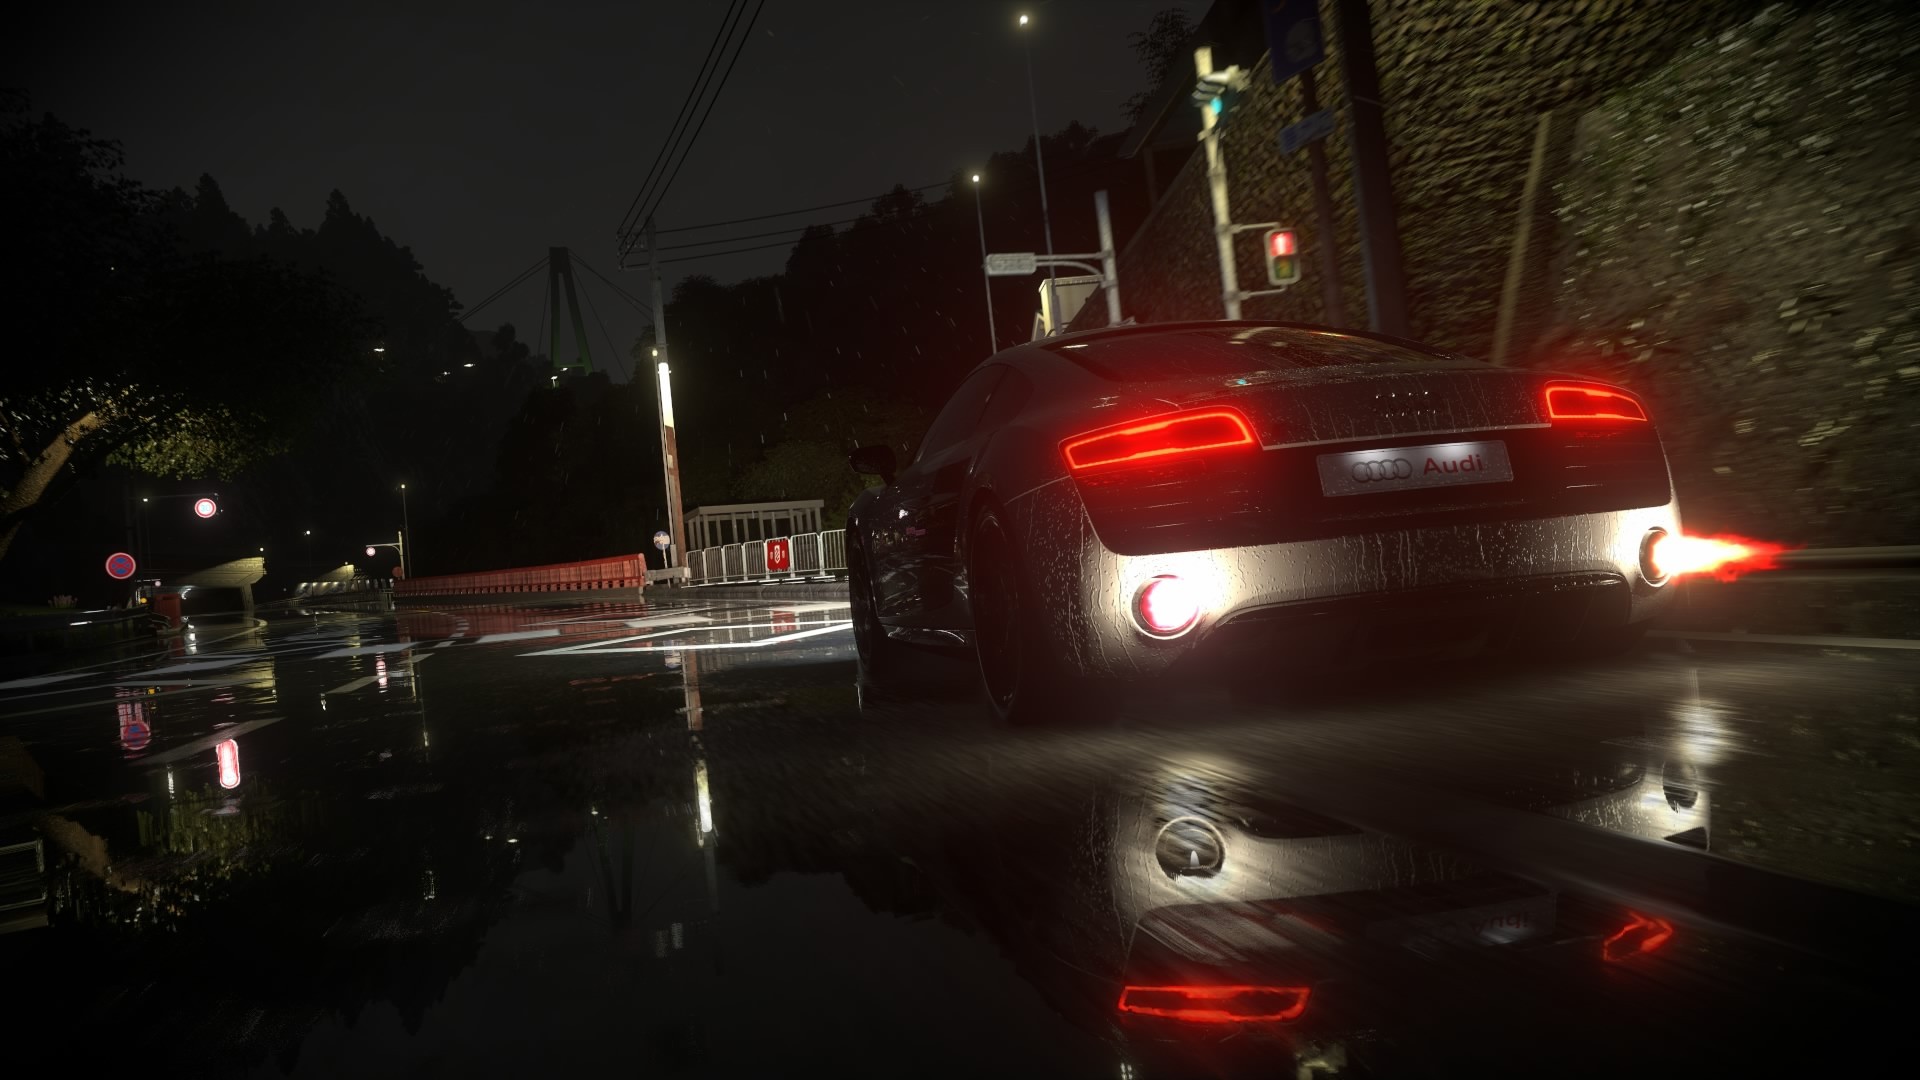 General 1920x1080 Driveclub Audi rain Audi R8 video games night road lights wet road screen shot car